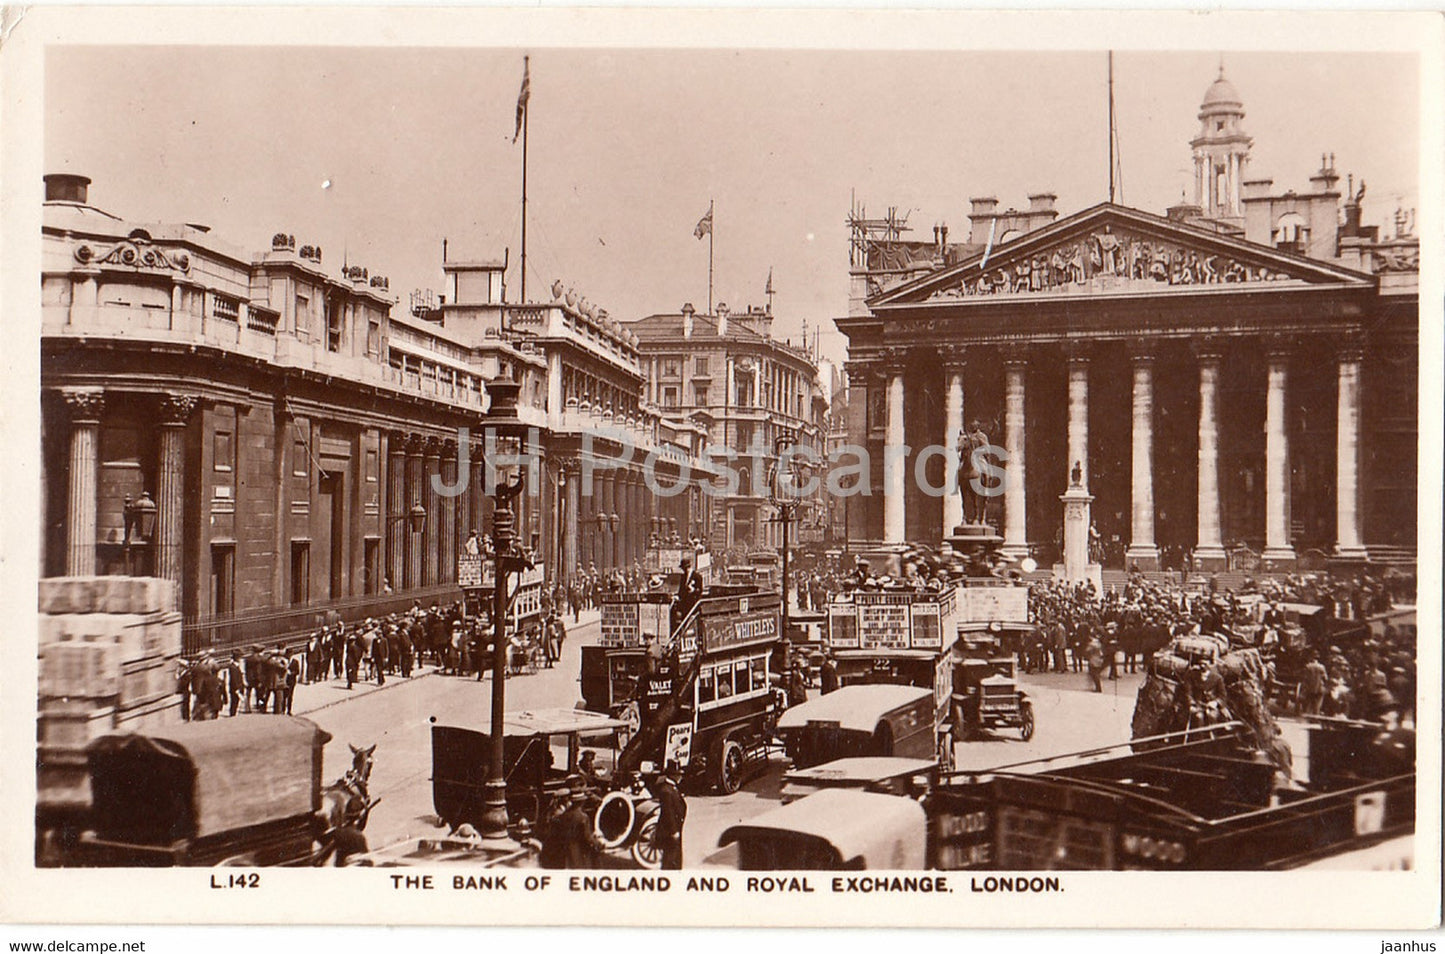 London - The Bank of England and Royal Exchange - cars - 142 - old postcard - England - United Kingdom - used - JH Postcards